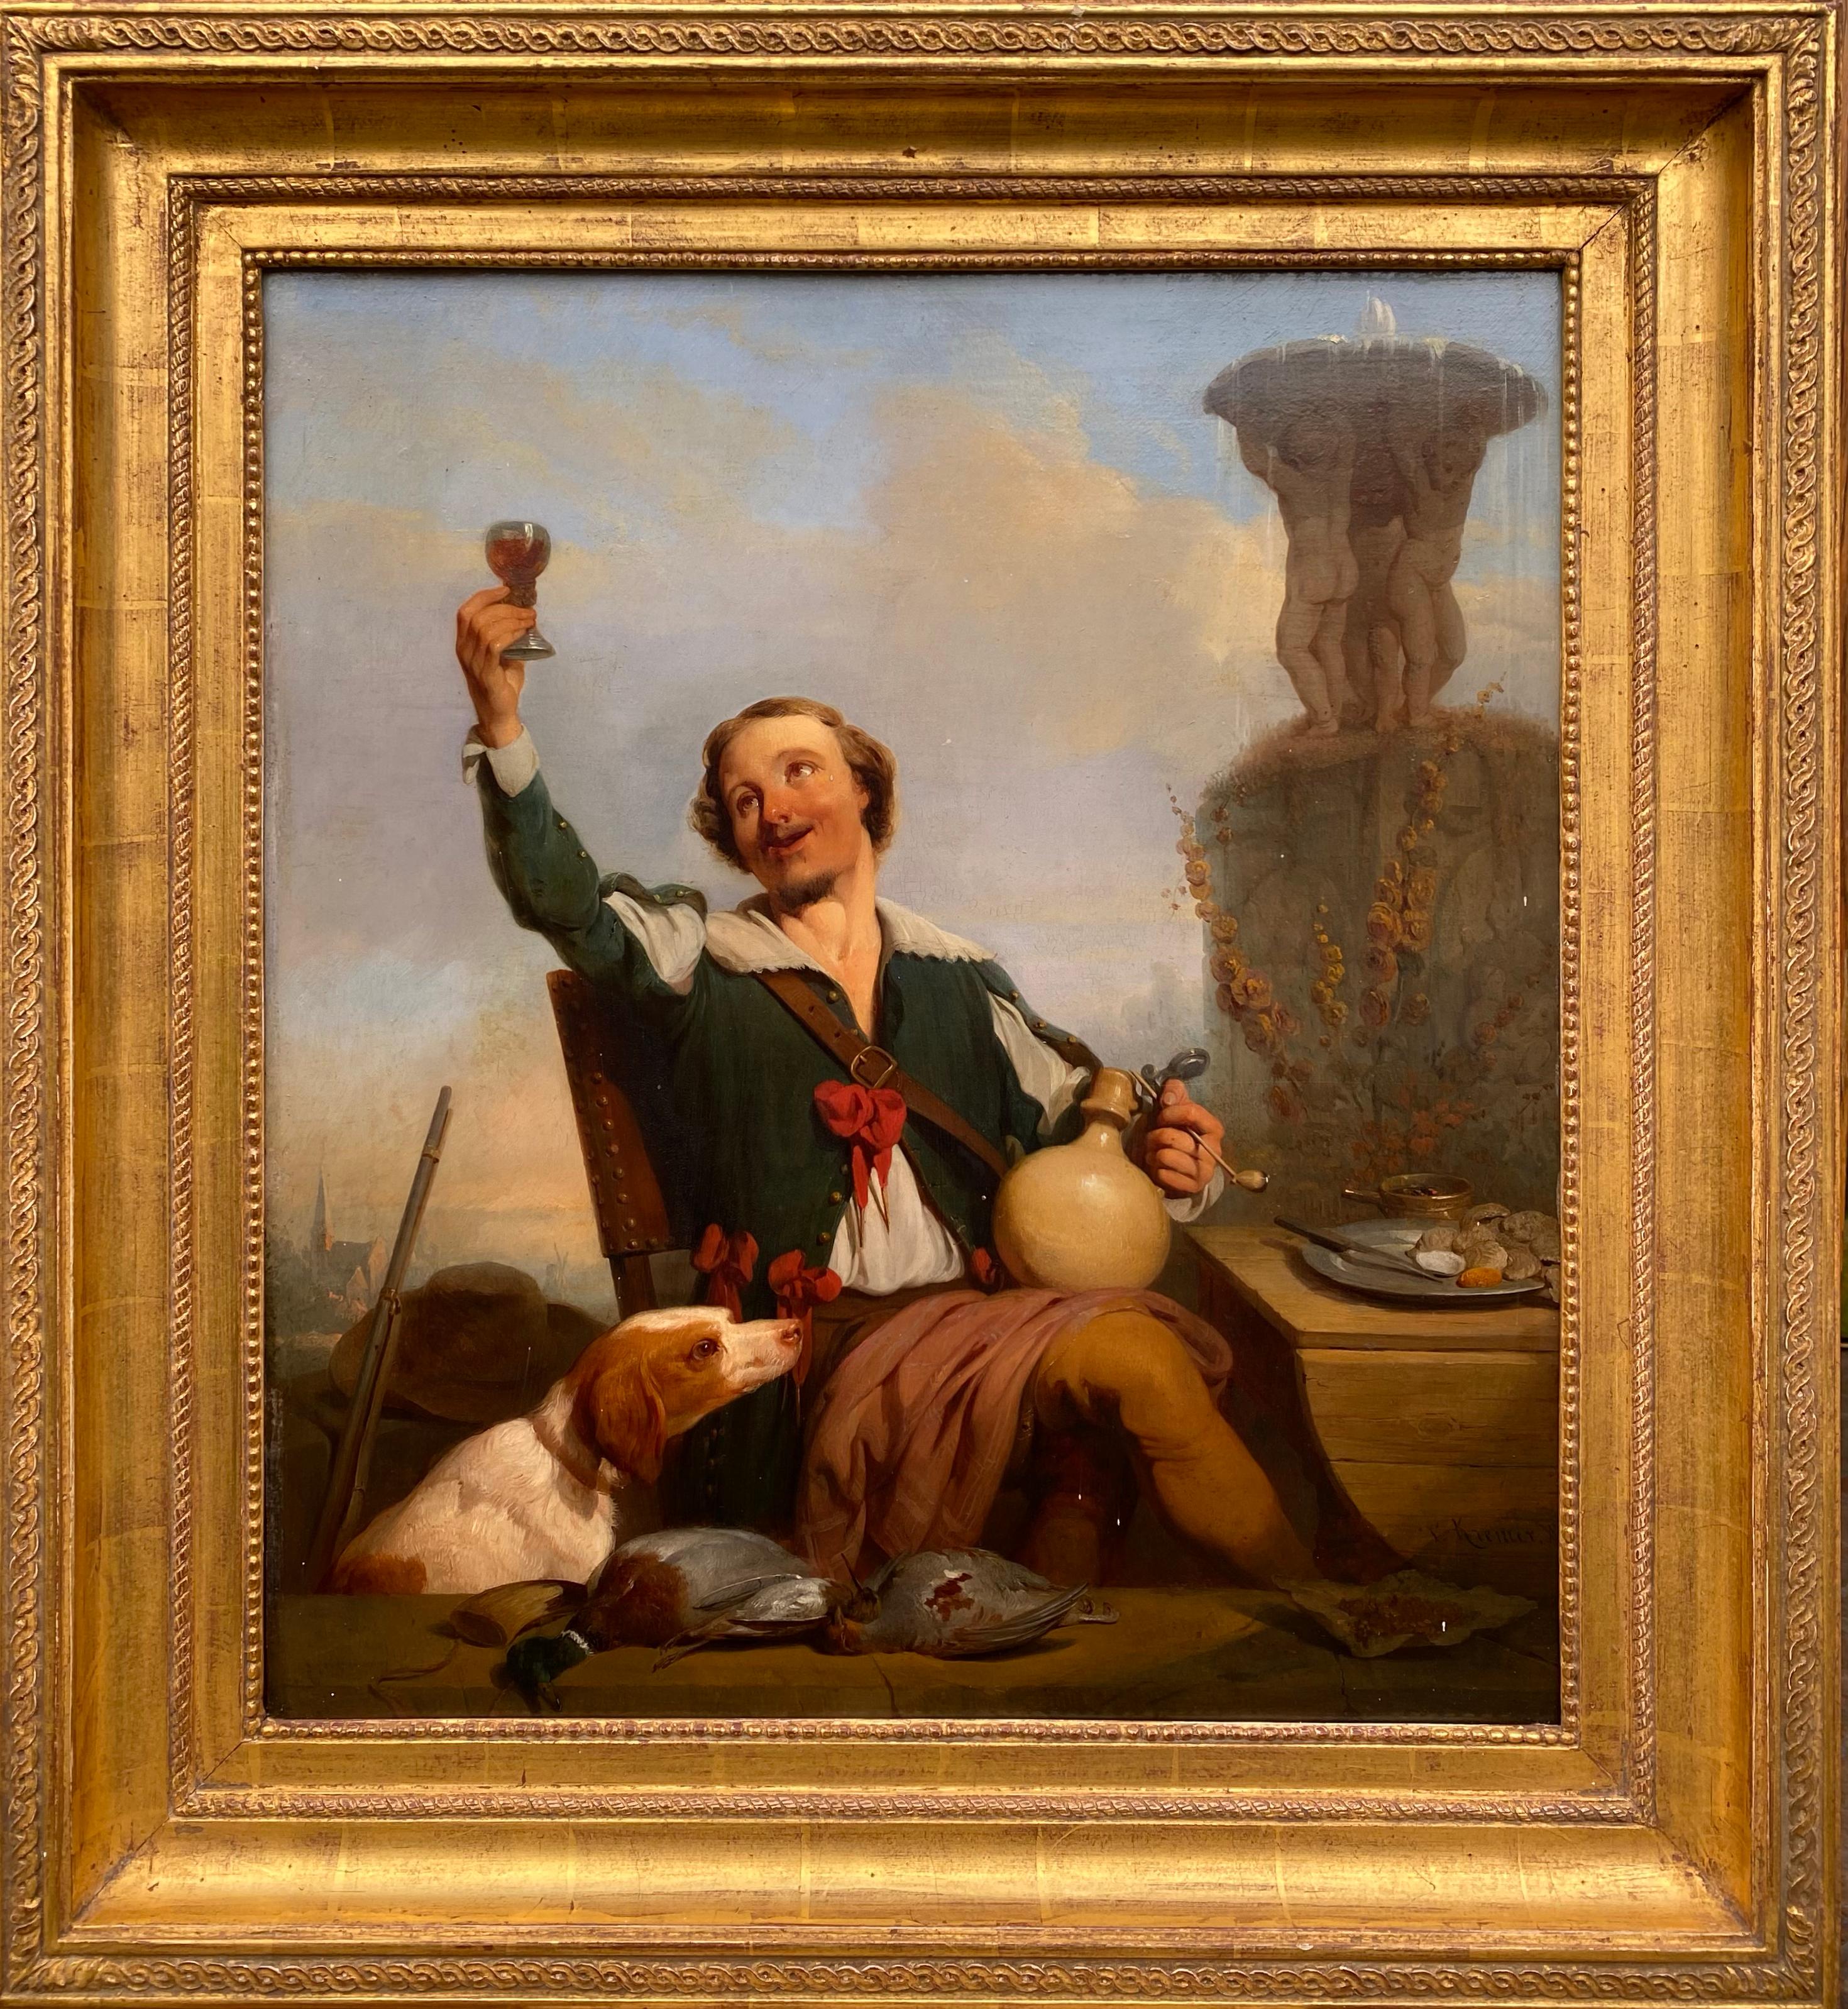 Nach einer guten Jagd, Petrus Kremer, Antwerpen 1801 - 1888, Belgischer Maler, Signiert